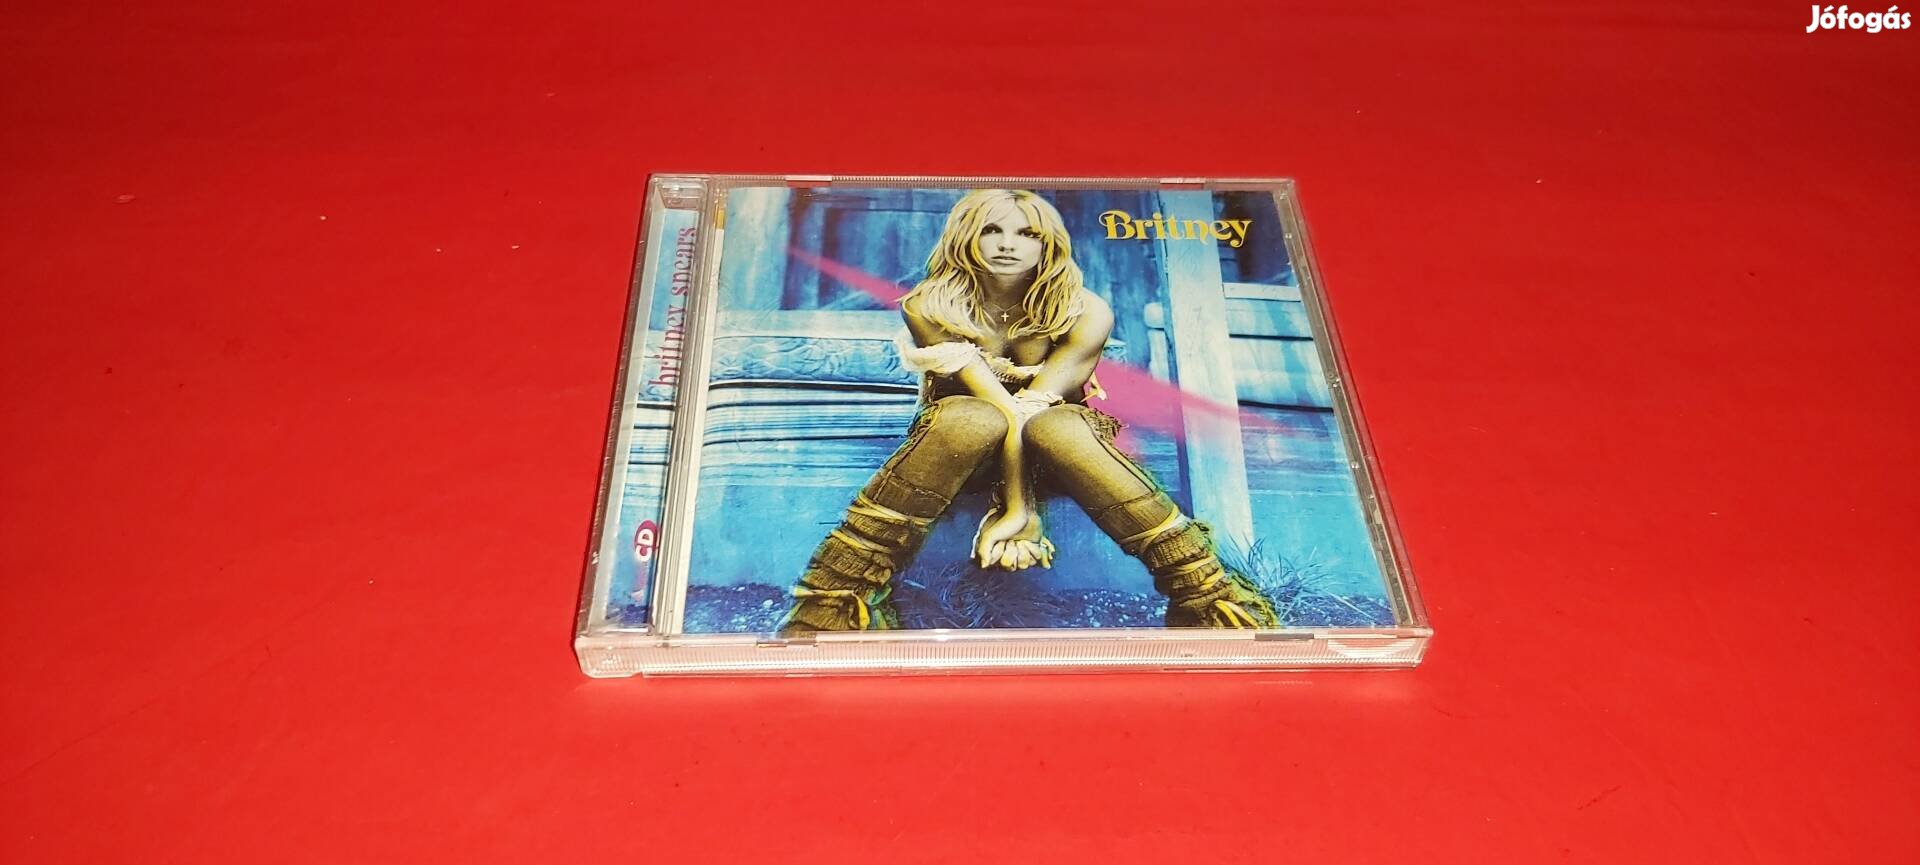 Britney Spears Britney Cd 2001